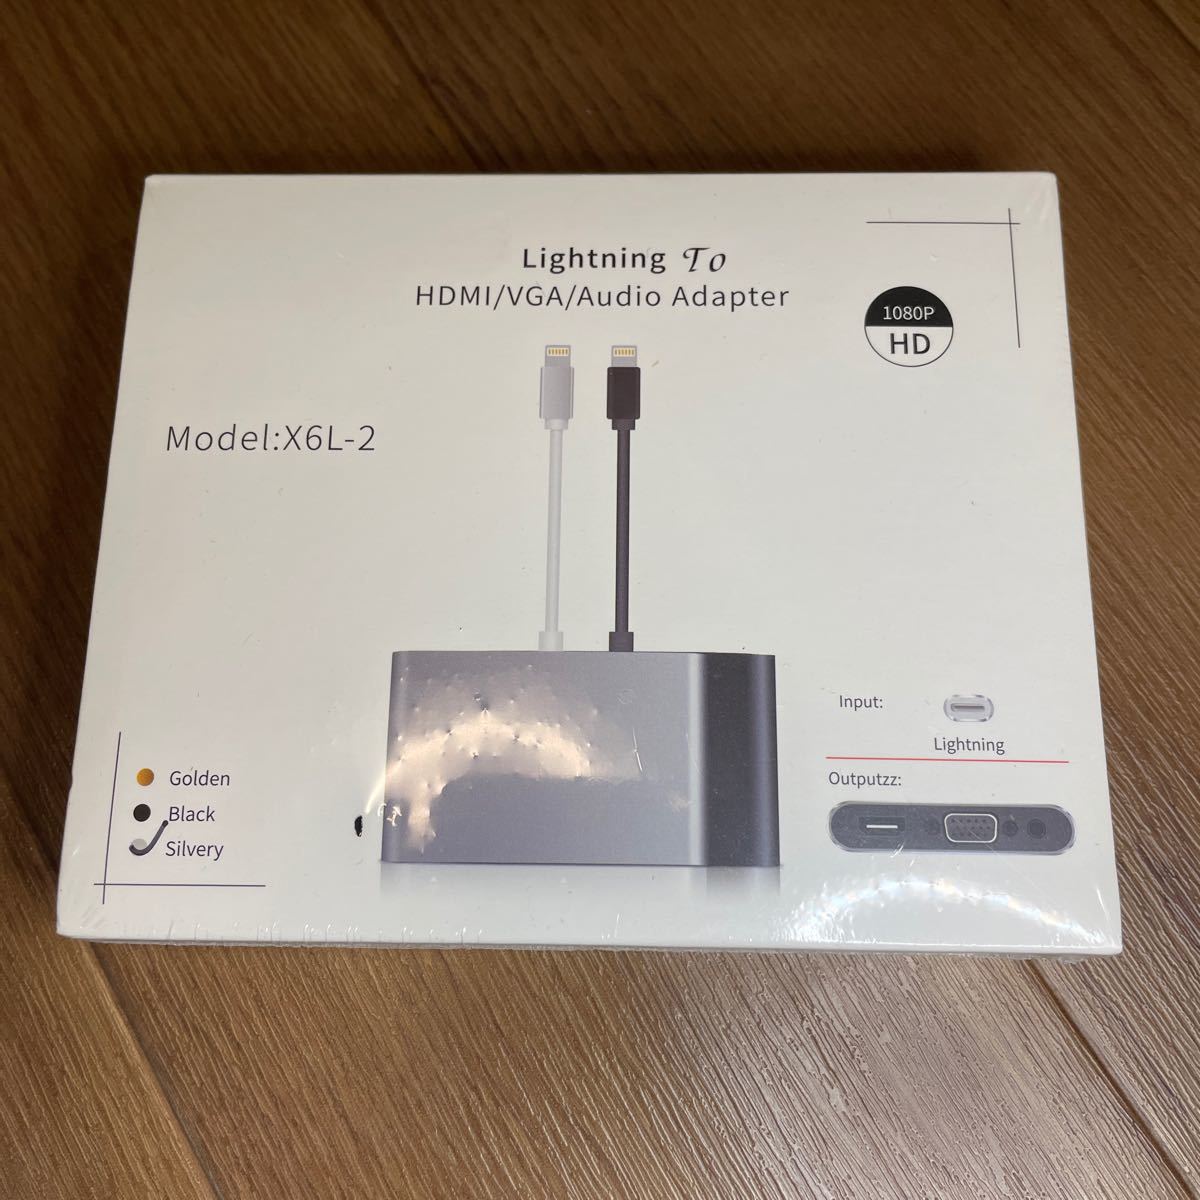 Lightning to HDMI/VGA/Audio Adapter